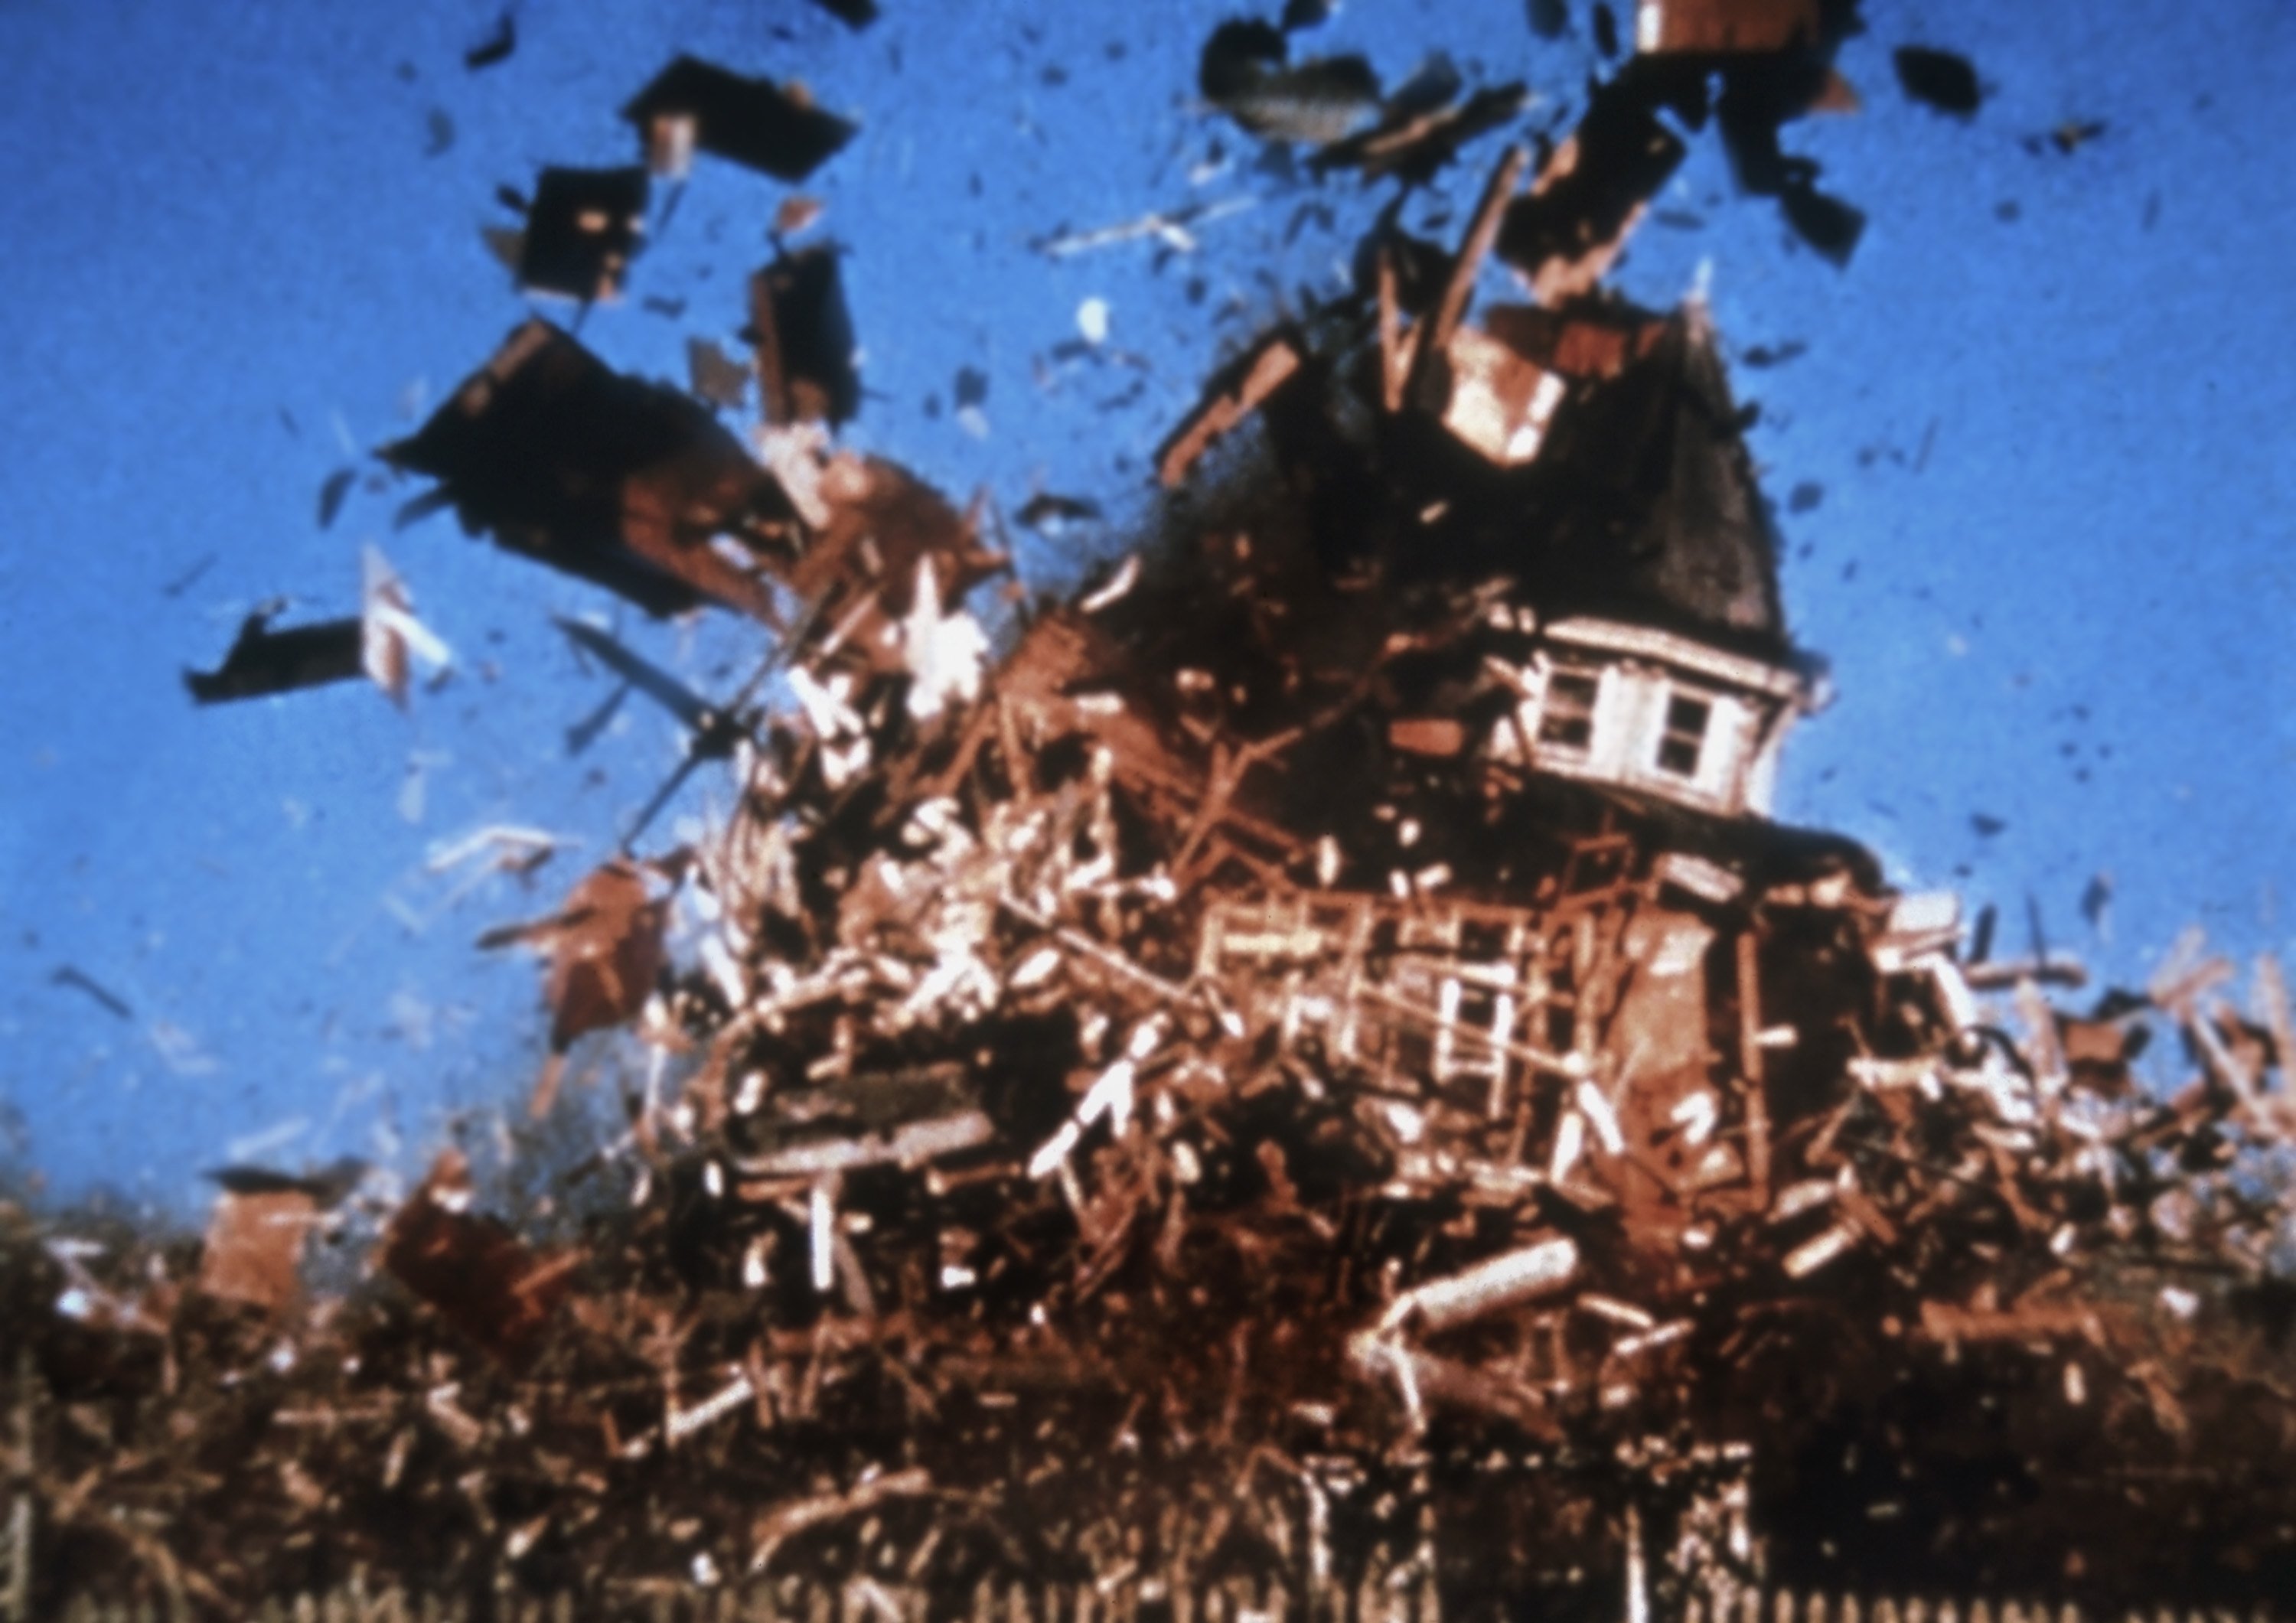 Little House on the Prairie explosion